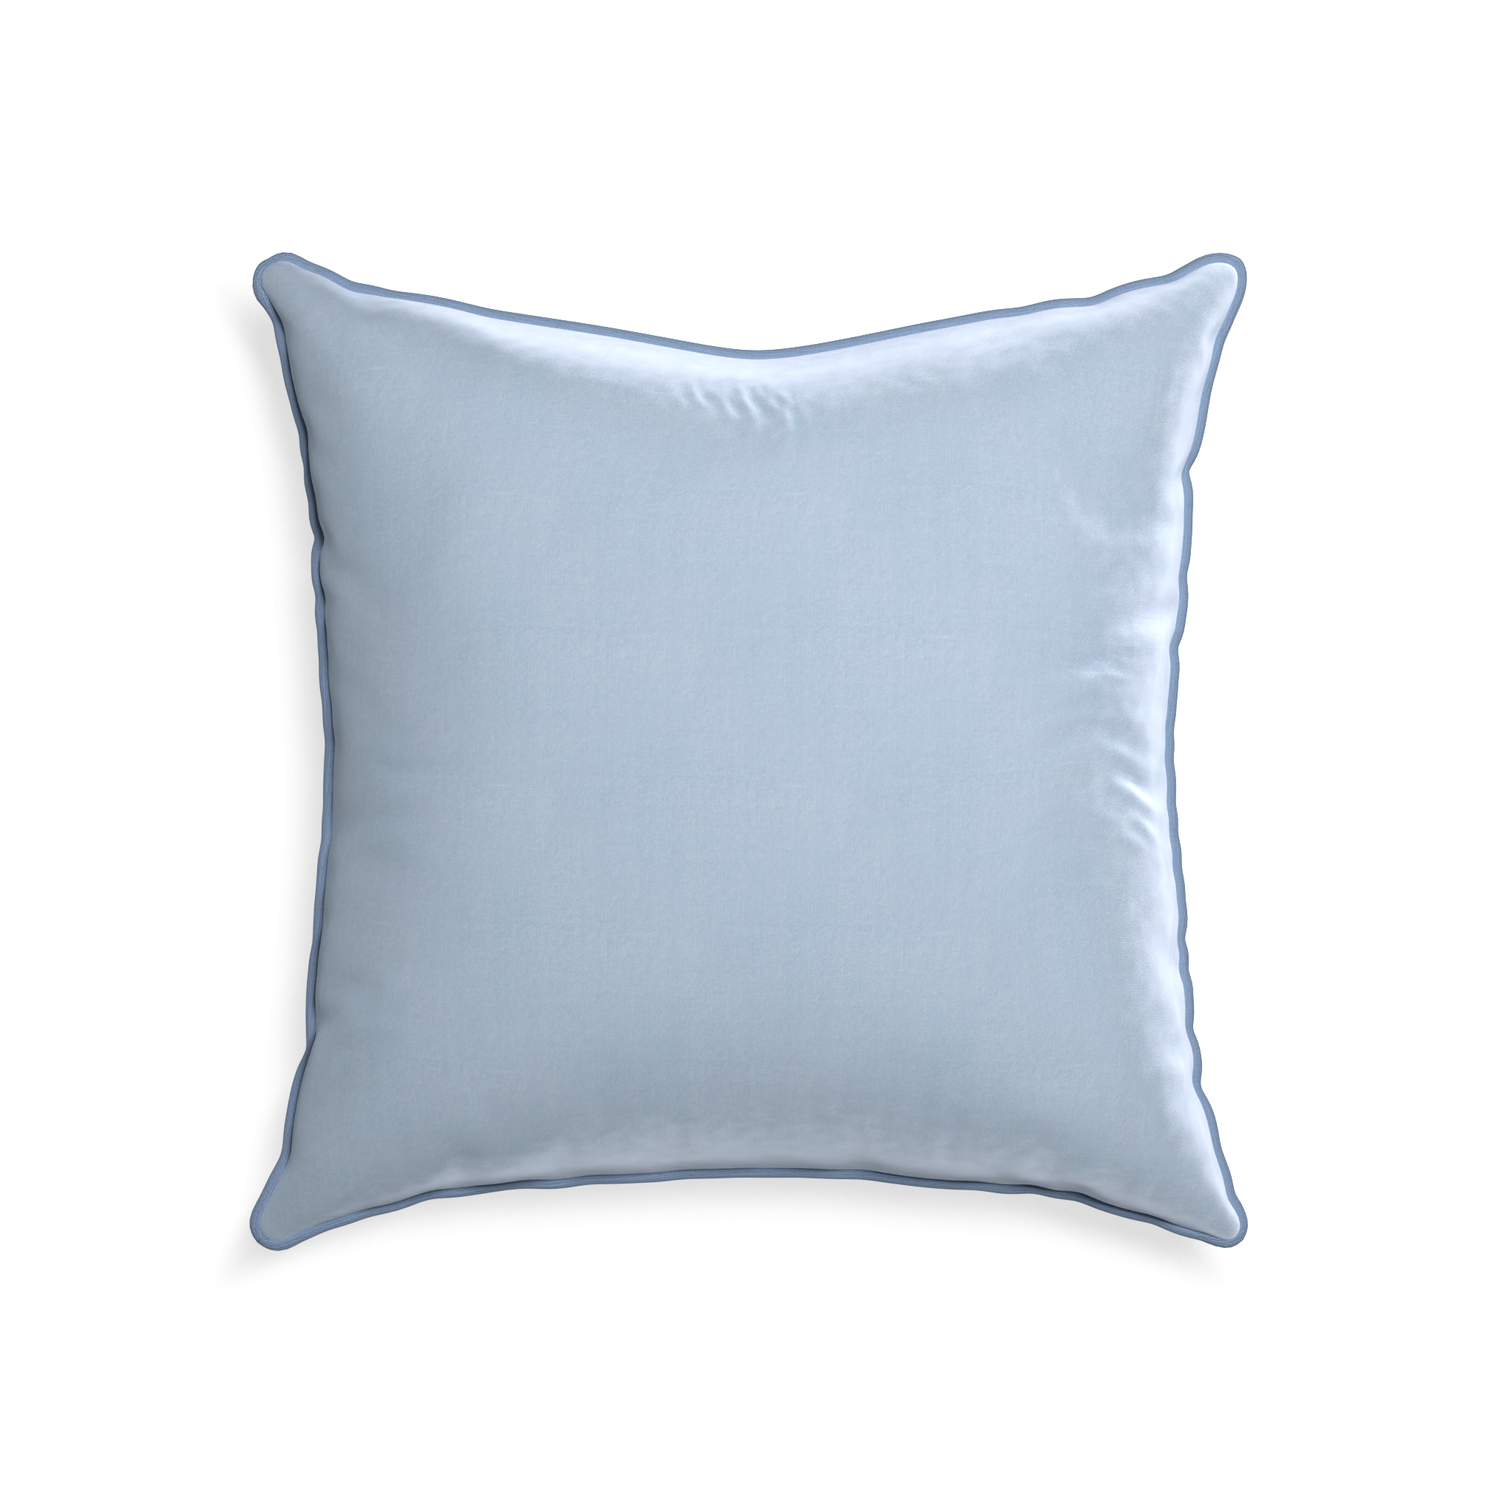 22-square sky velvet custom pillow with sky piping on white background